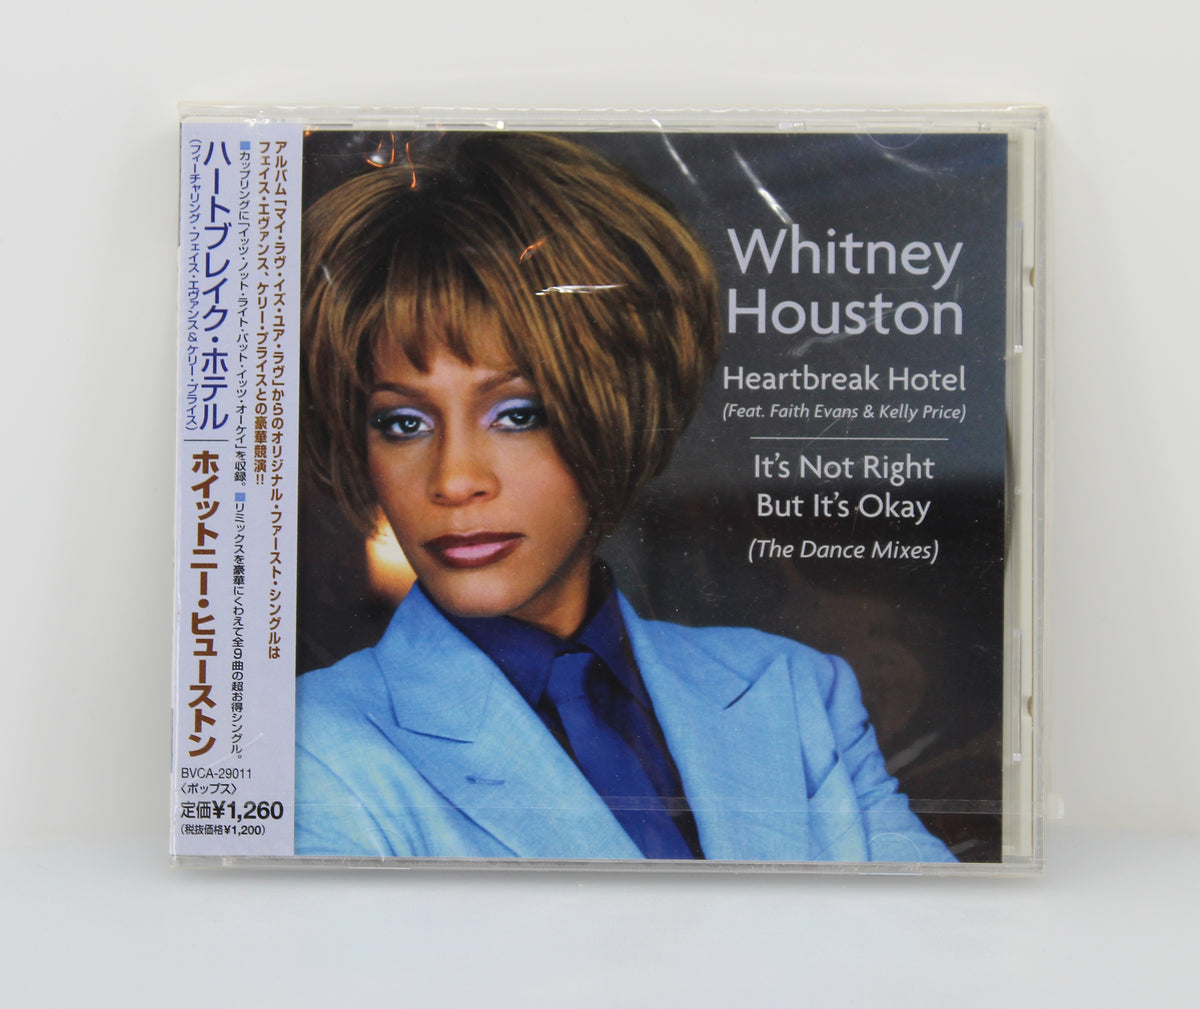 Whitney Houston – Heartbreak Hotel, CD, Maxi-Single, Japan 1999